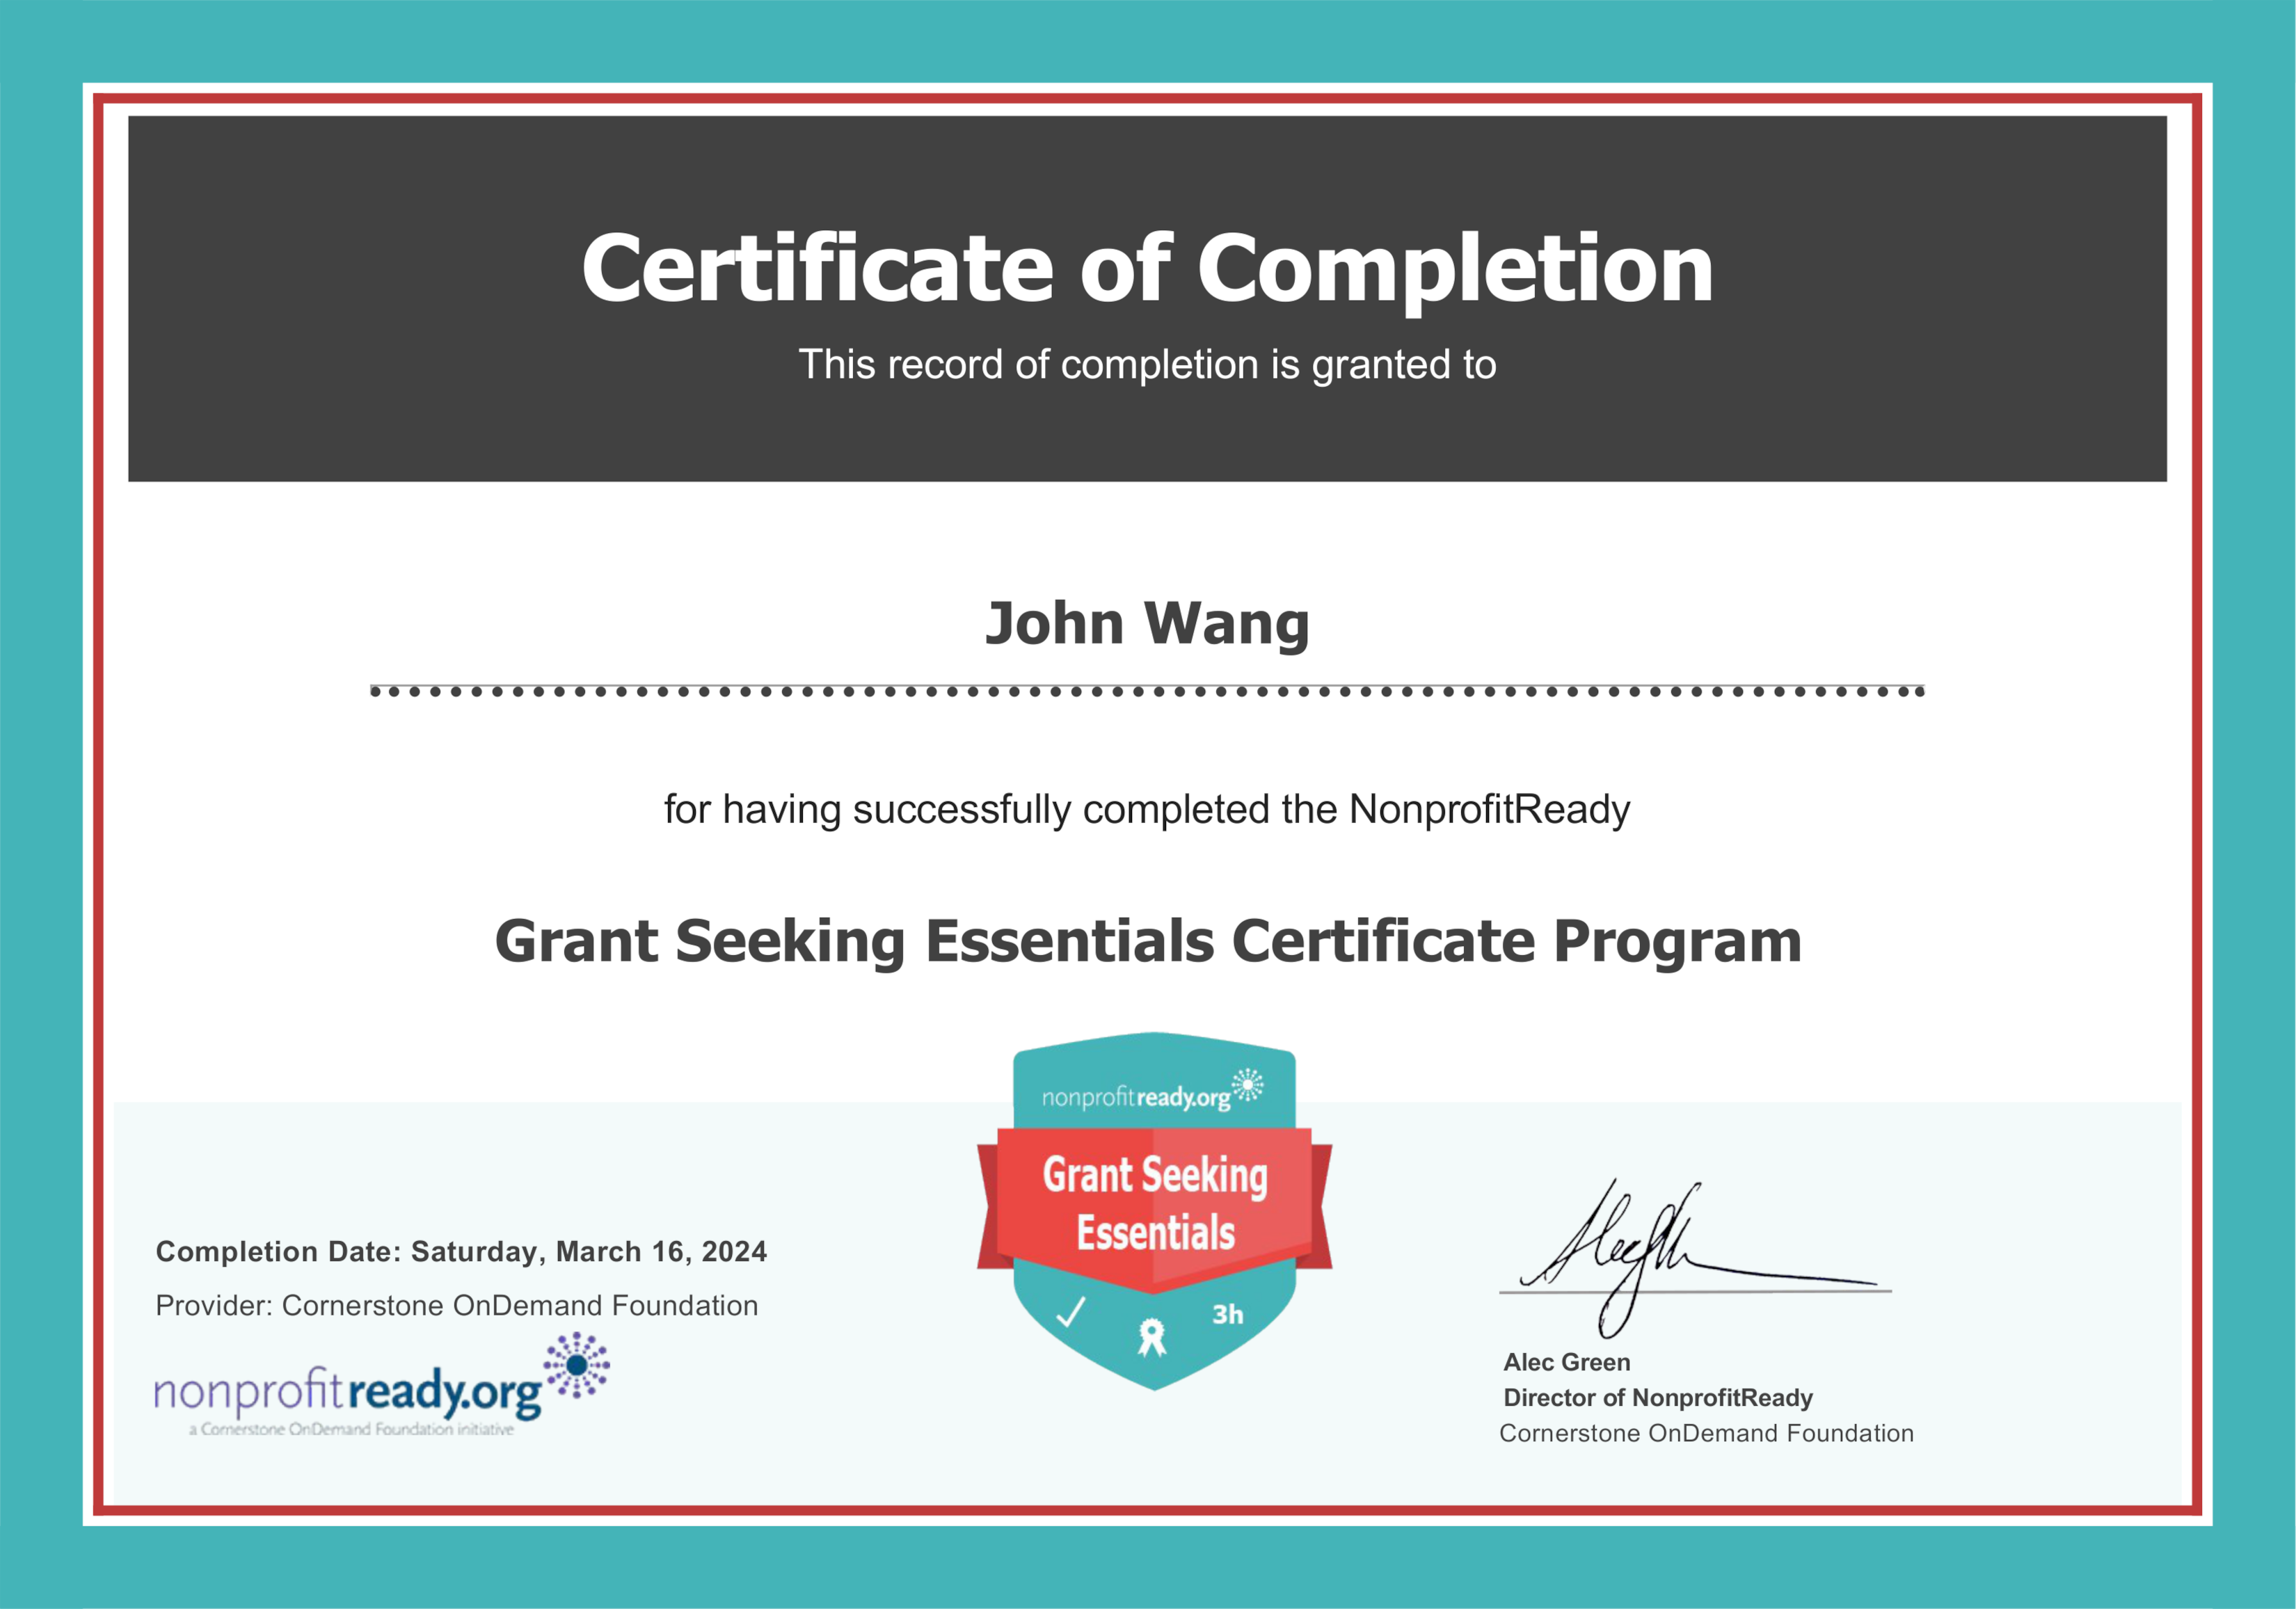 John's Grant Seeking Essentials Certificate from Cornerstone OnDemand Foundation